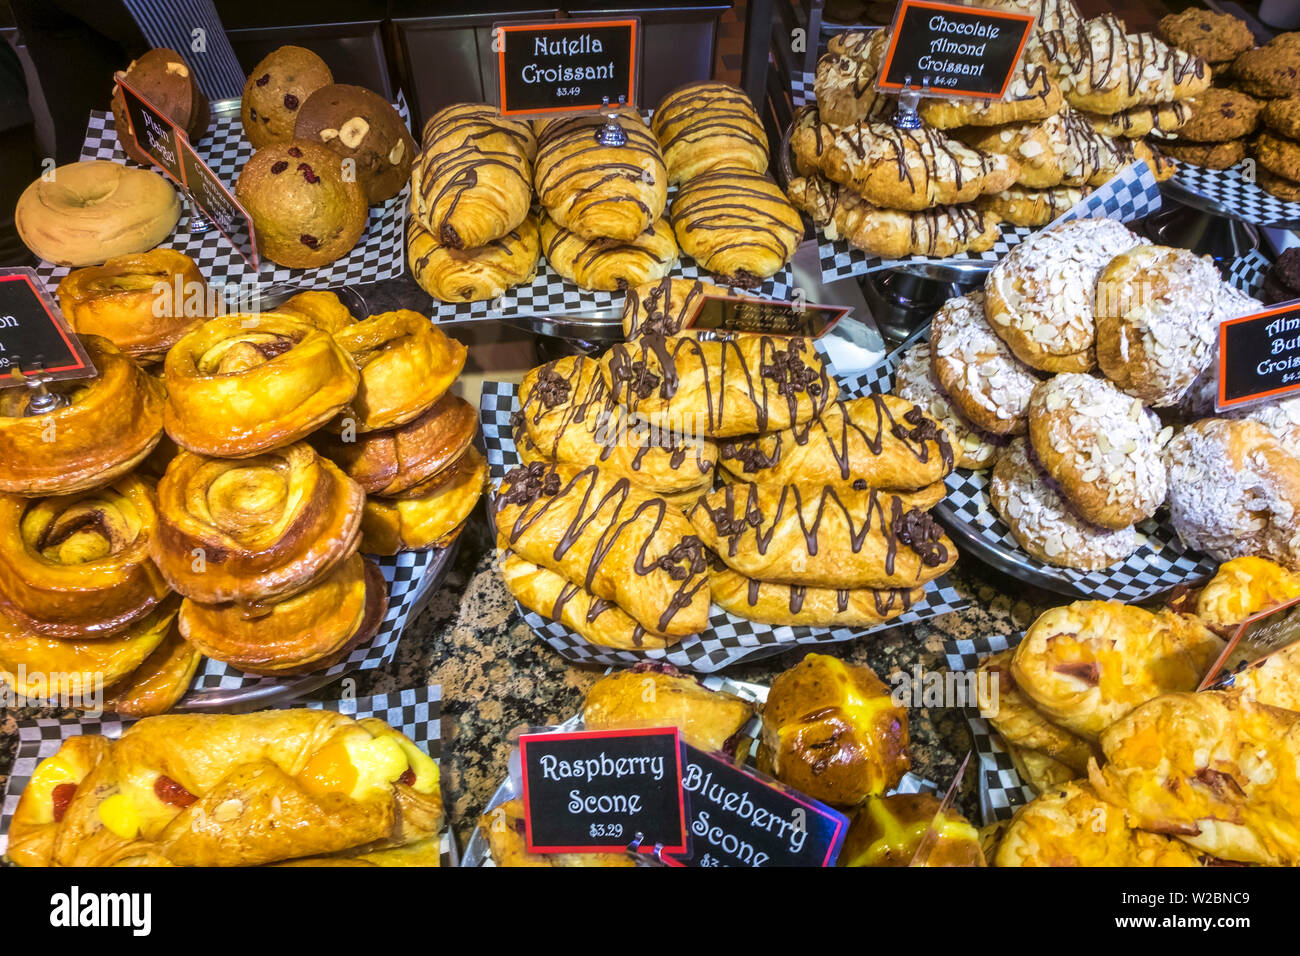 Pastries & croissants, Public Market, Granville Island, Vancouver, British Columbia, Canada Stock Photo